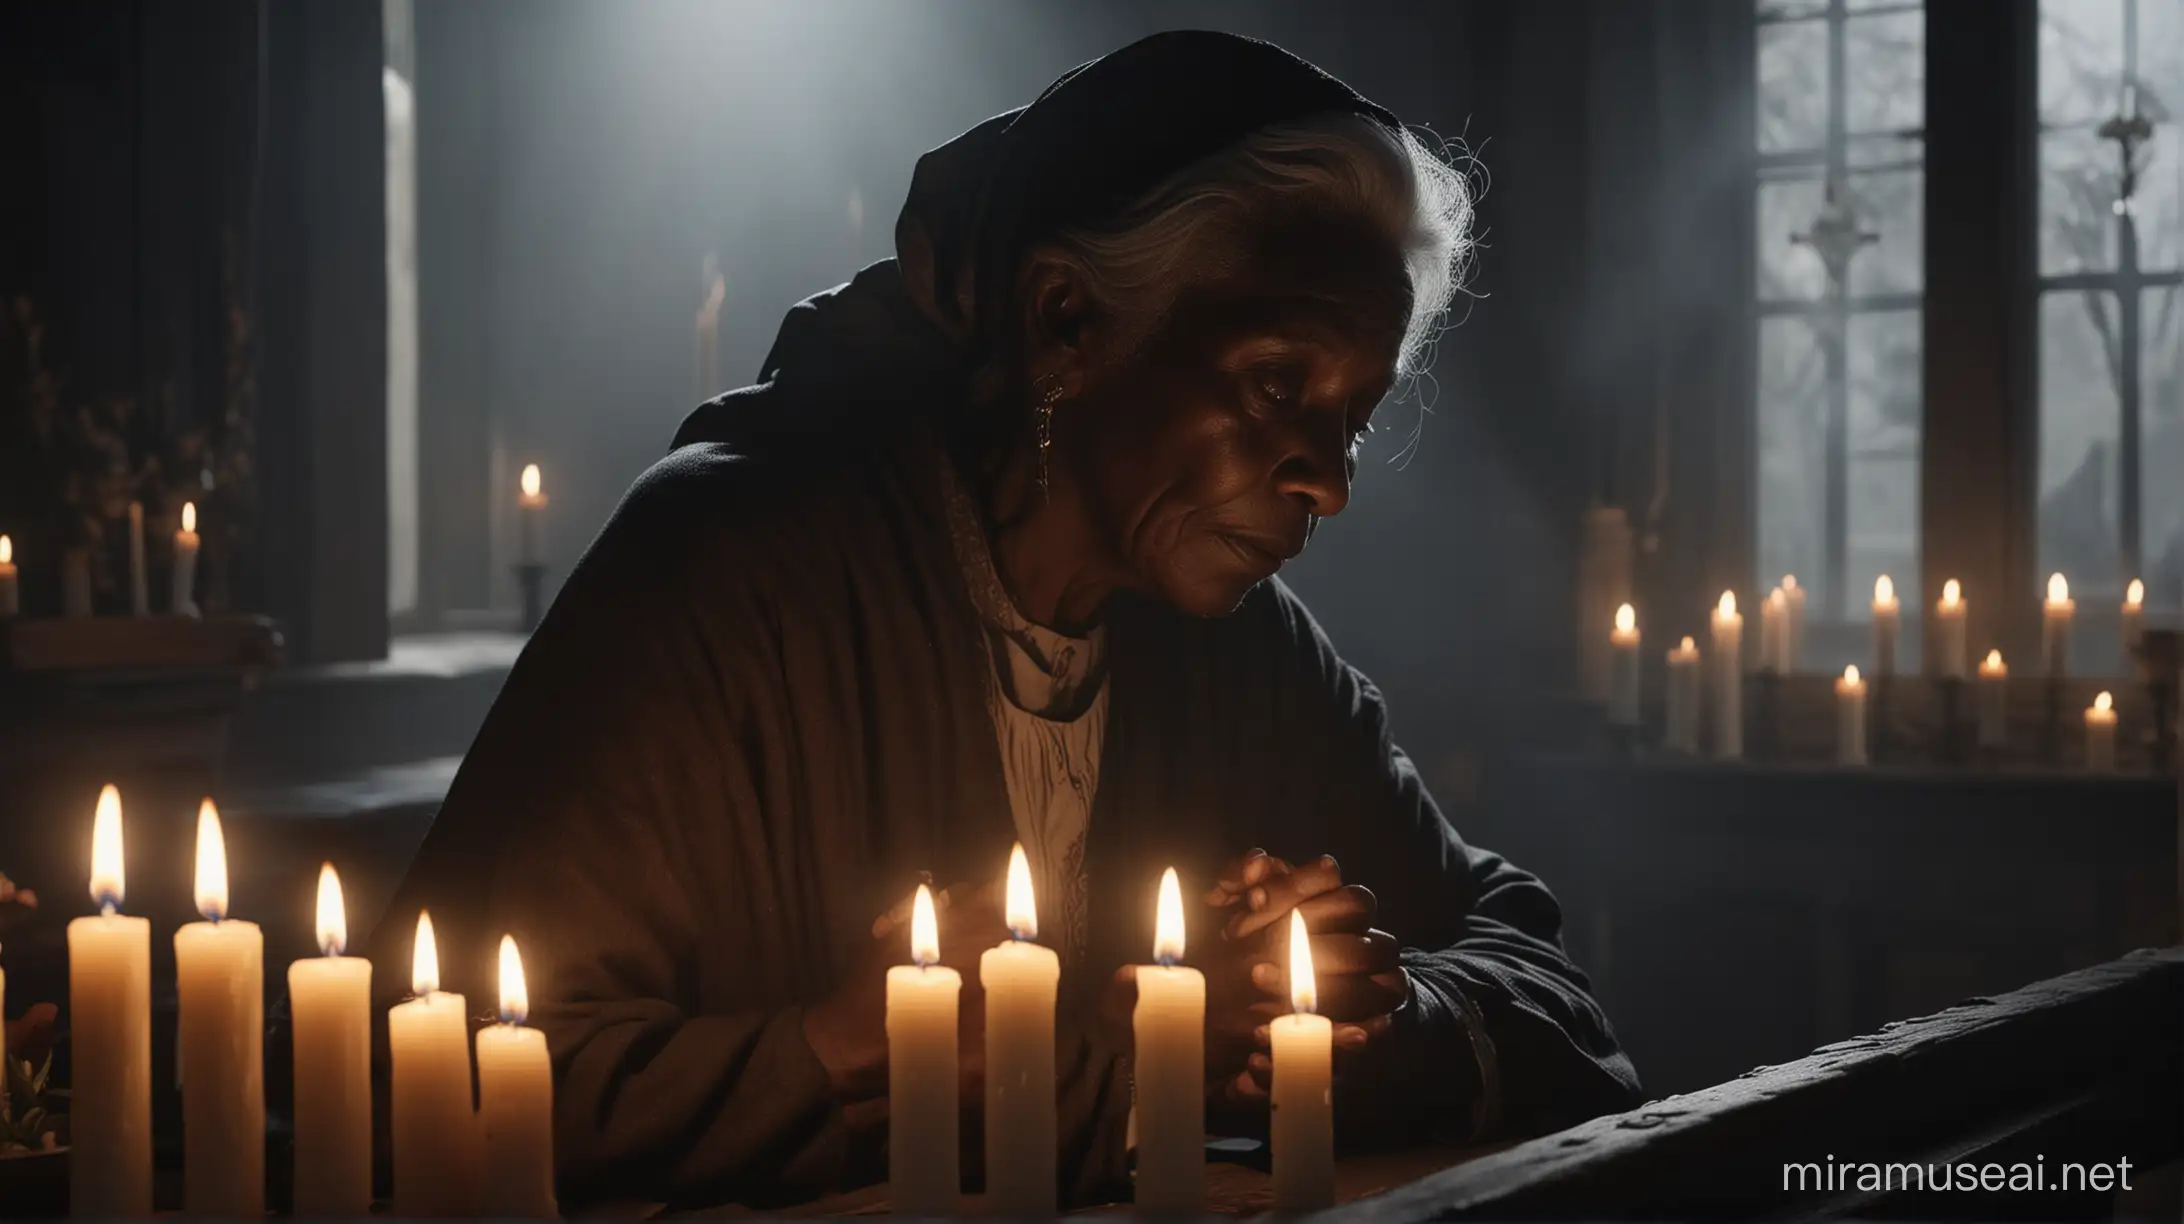 Elderly Woman in Reverent Prayer in Candlelit Church